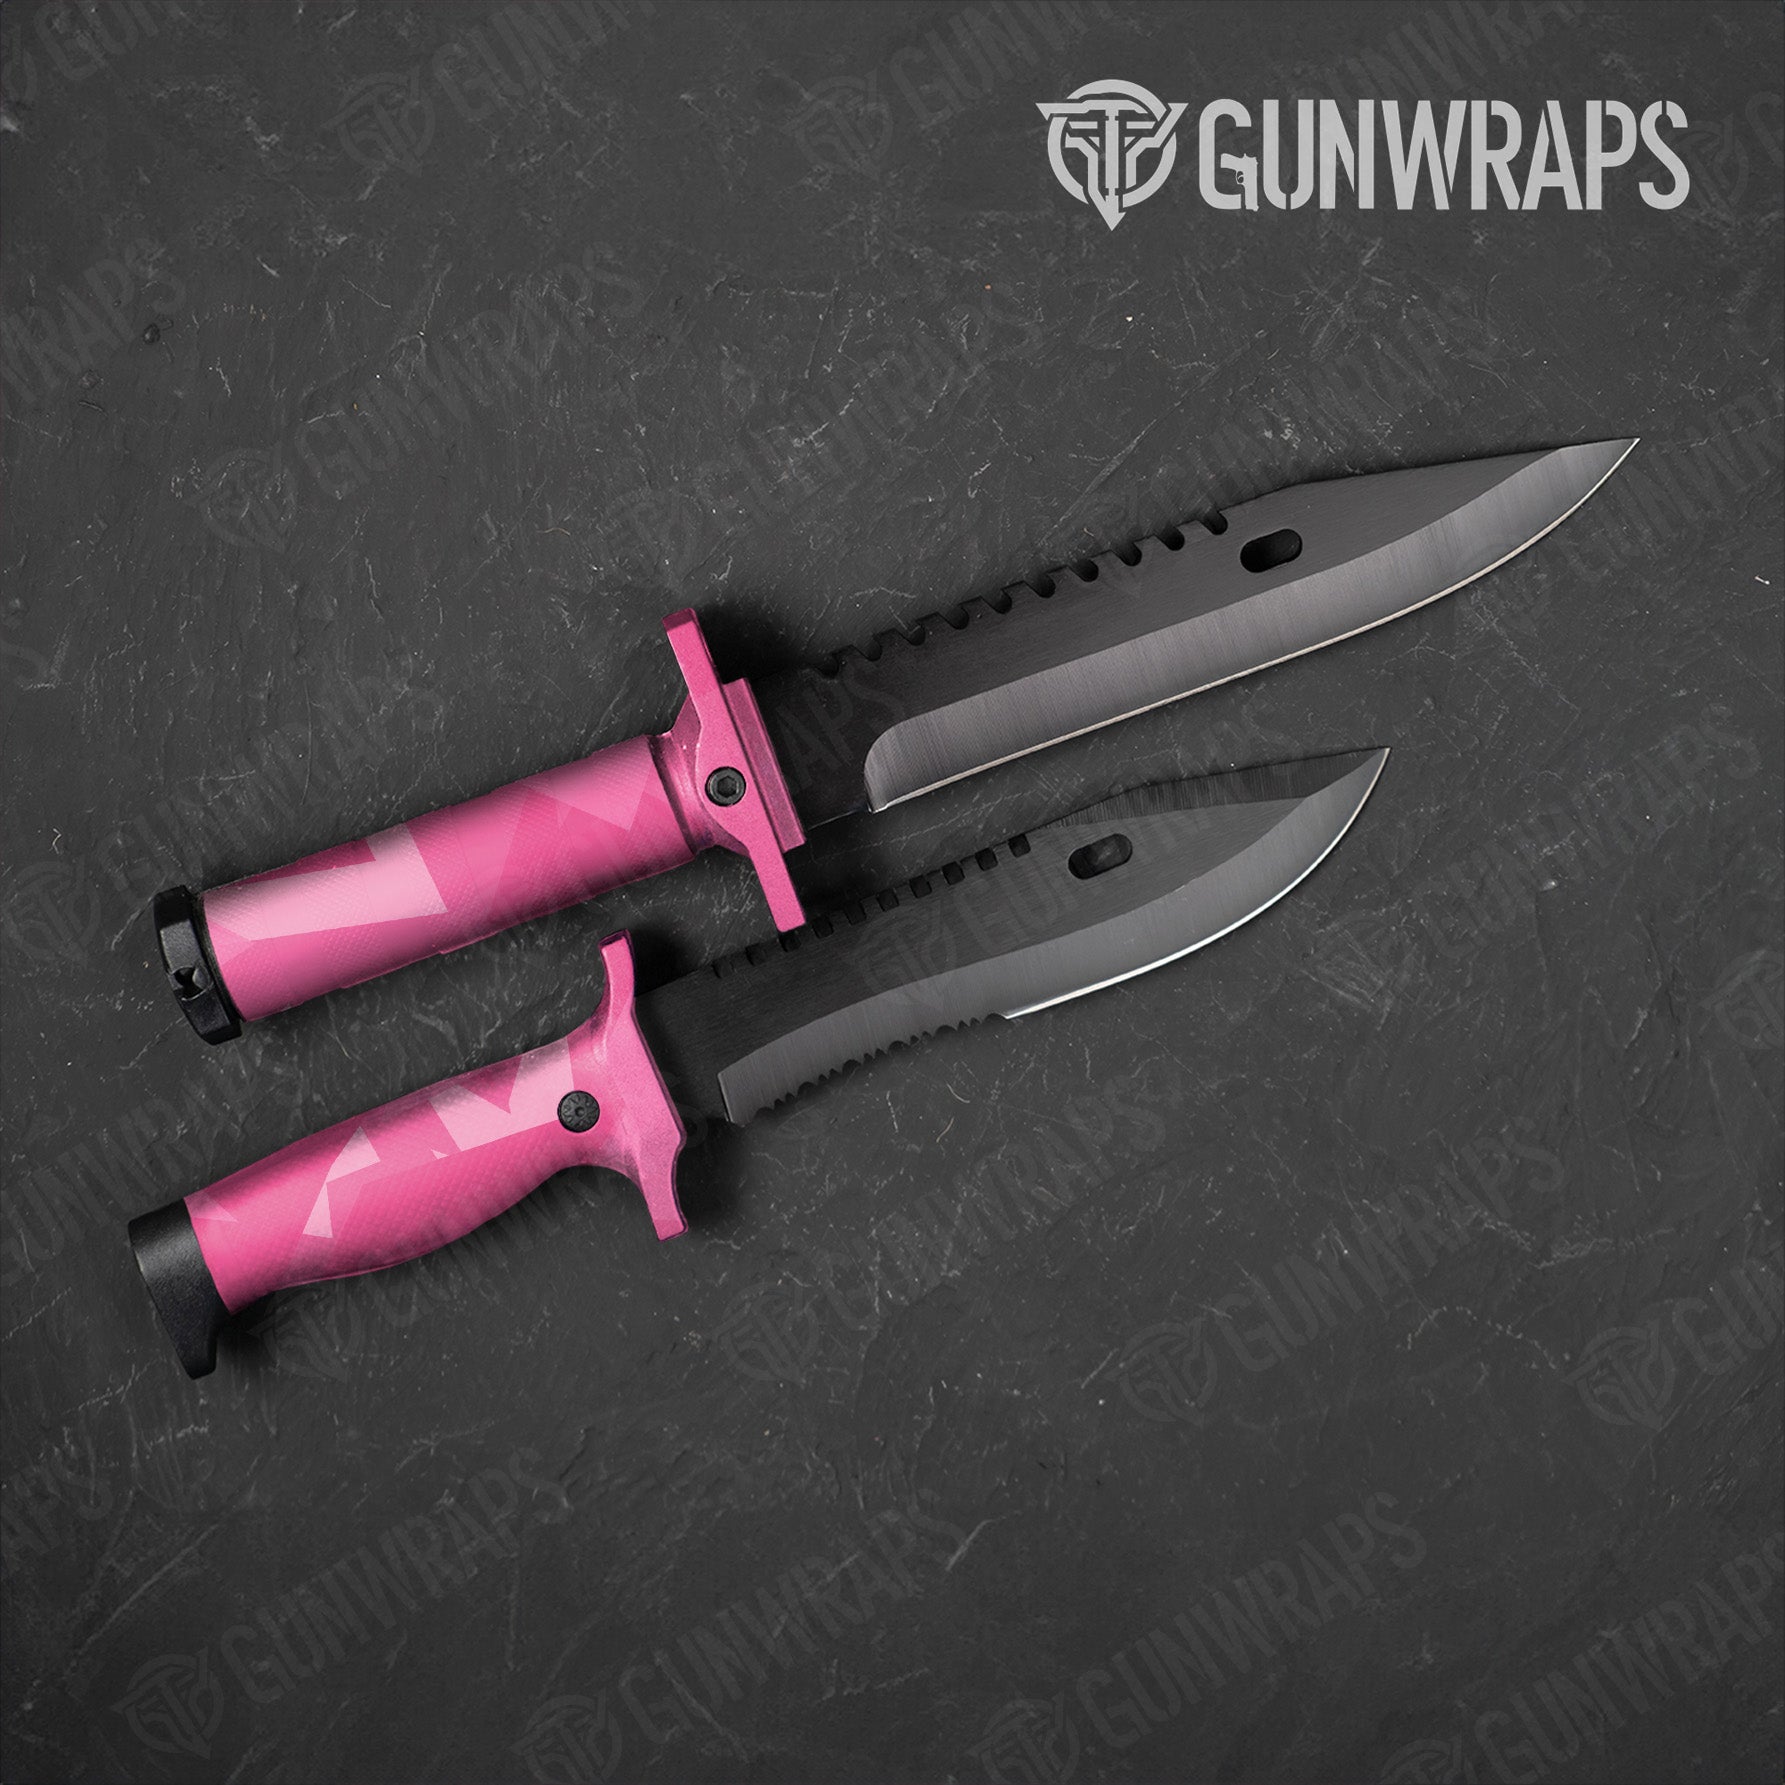 Shattered Elite Pink Camo Knife Gear Skin Vinyl Wrap